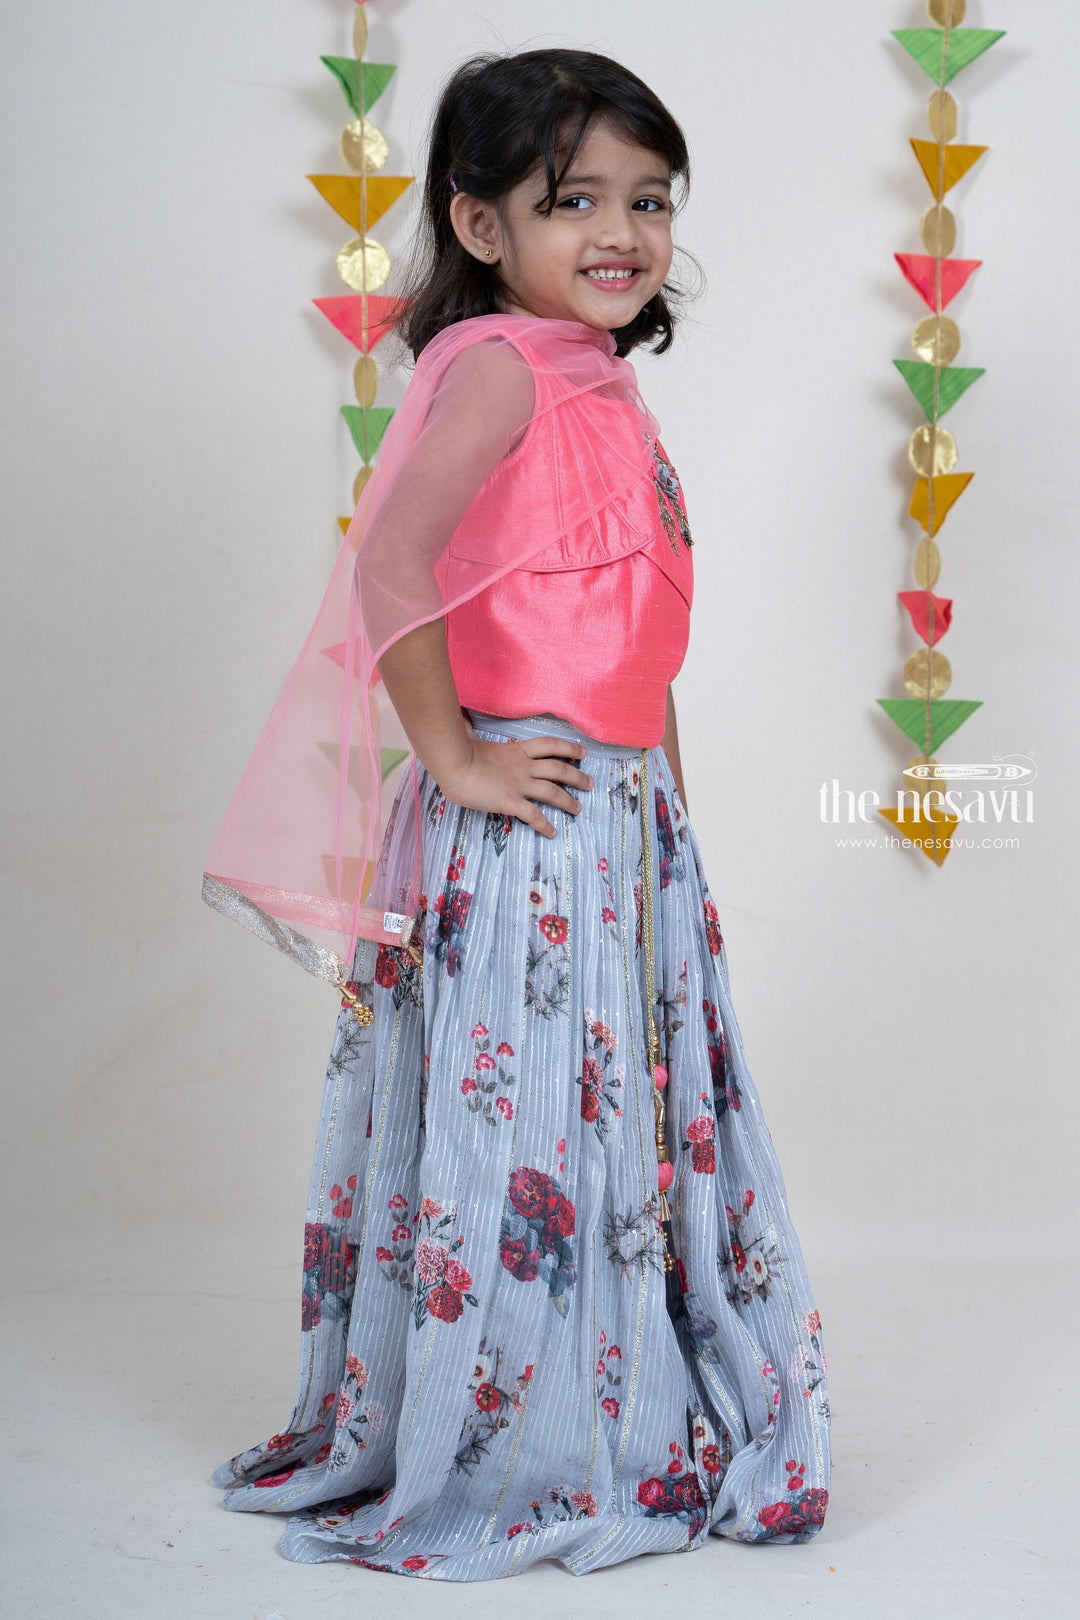 The Nesavu Lehenga & Ghagra Ash Grey Floral Pleated Skirt With Pink Embroidery Pin-Tucked Crop Top psr silks Nesavu